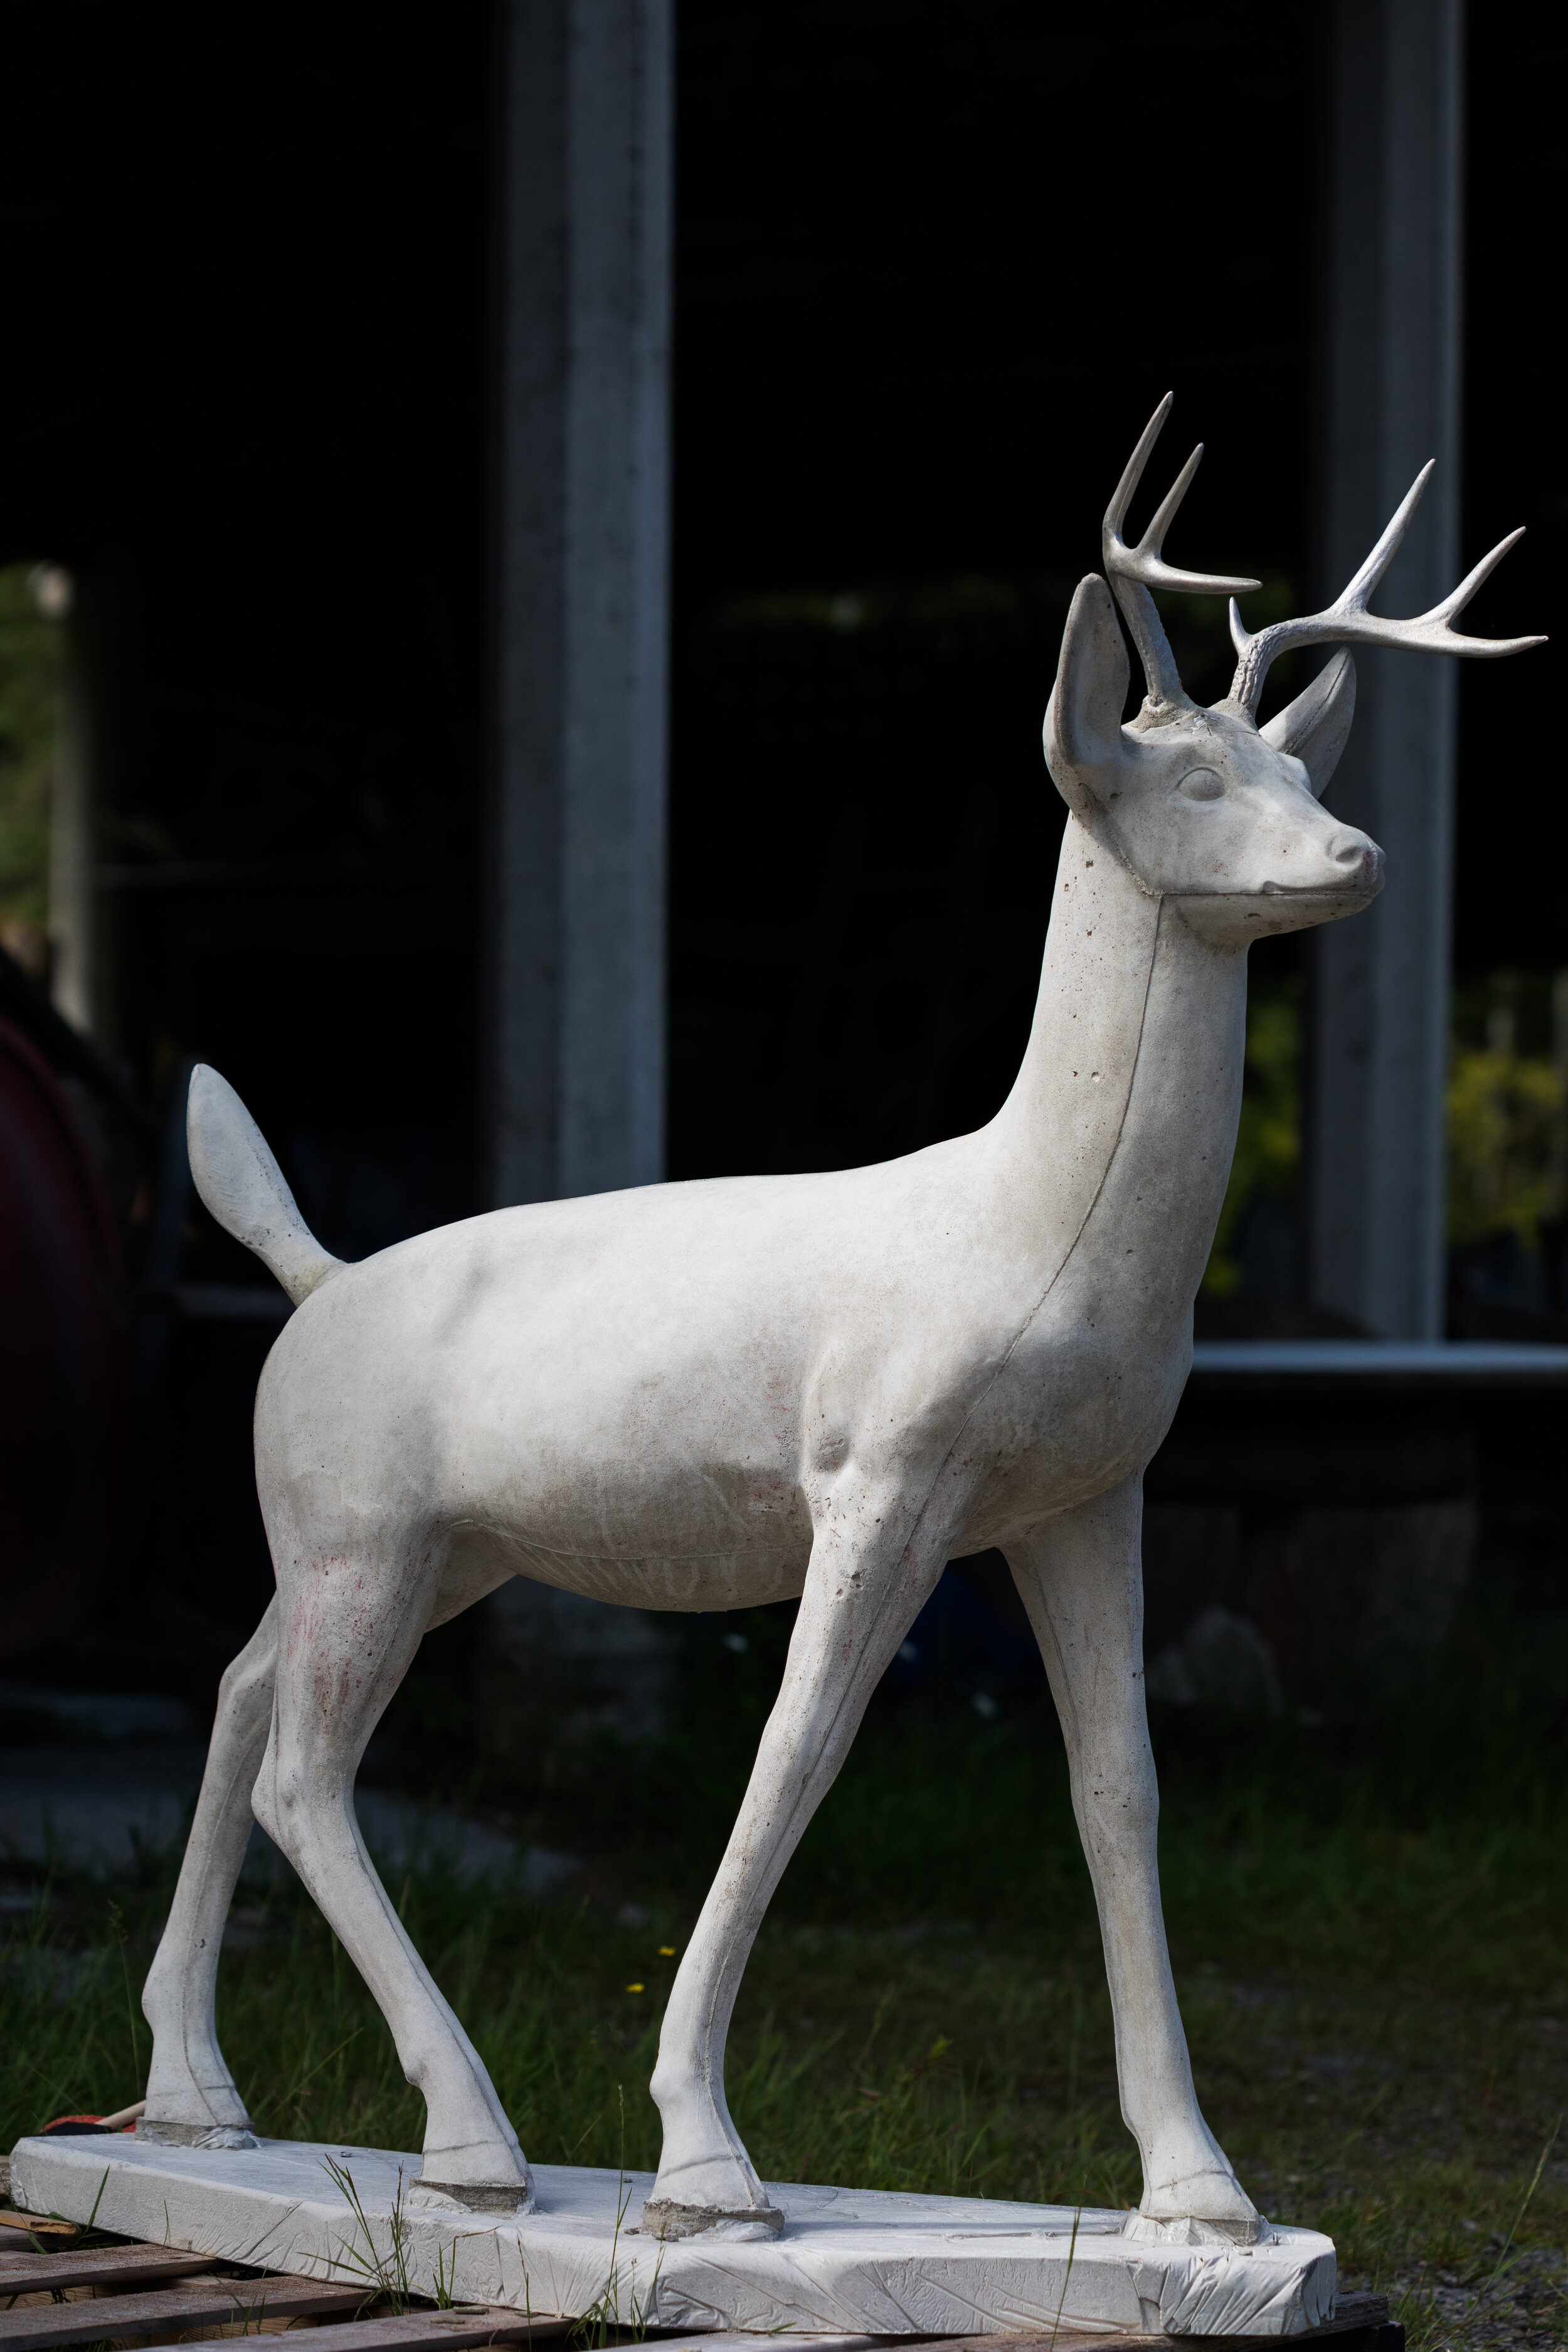 Hansen's Garden Ornaments-Concrete animal sculptures, statues and